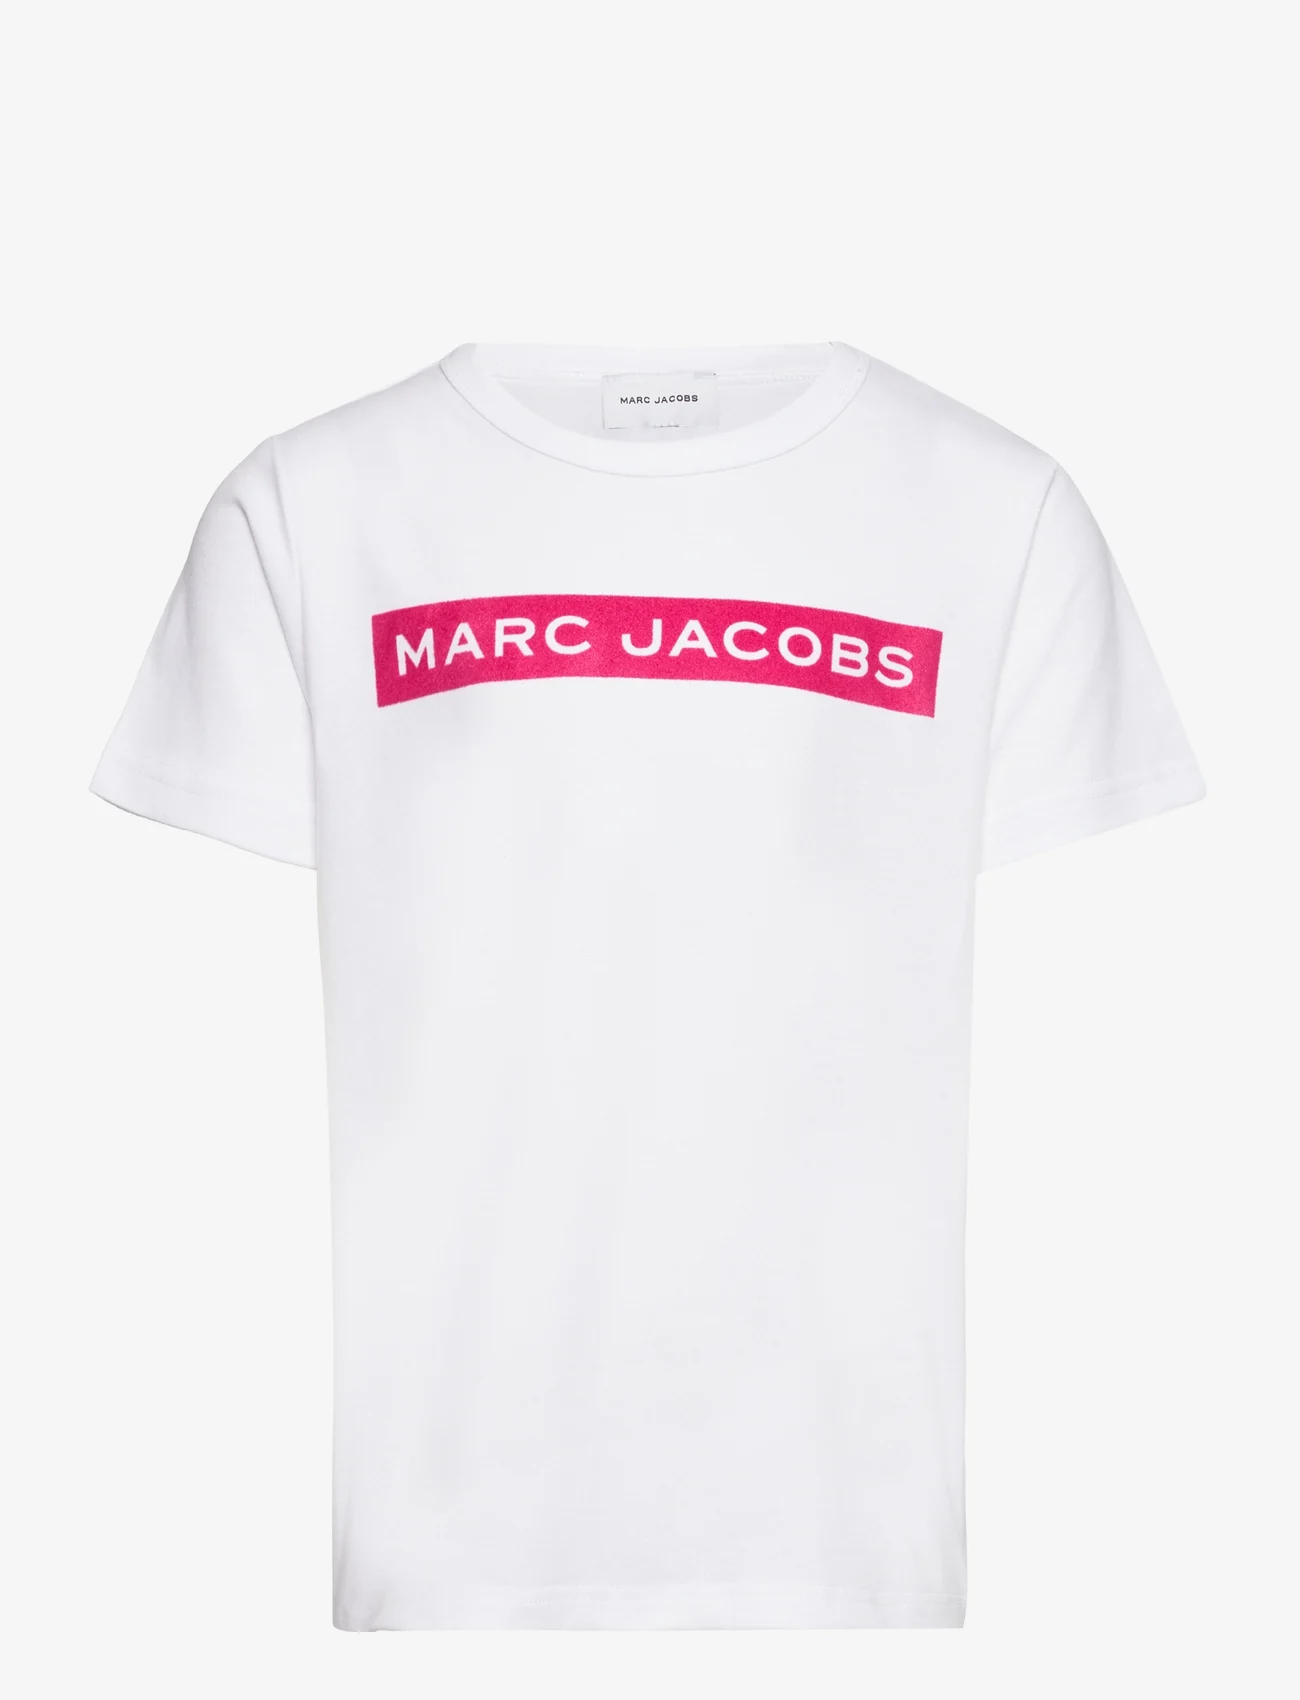 Little Marc Jacobs - SHORT SLEEVES TEE-SHIRT - kortærmede t-shirts - white - 0